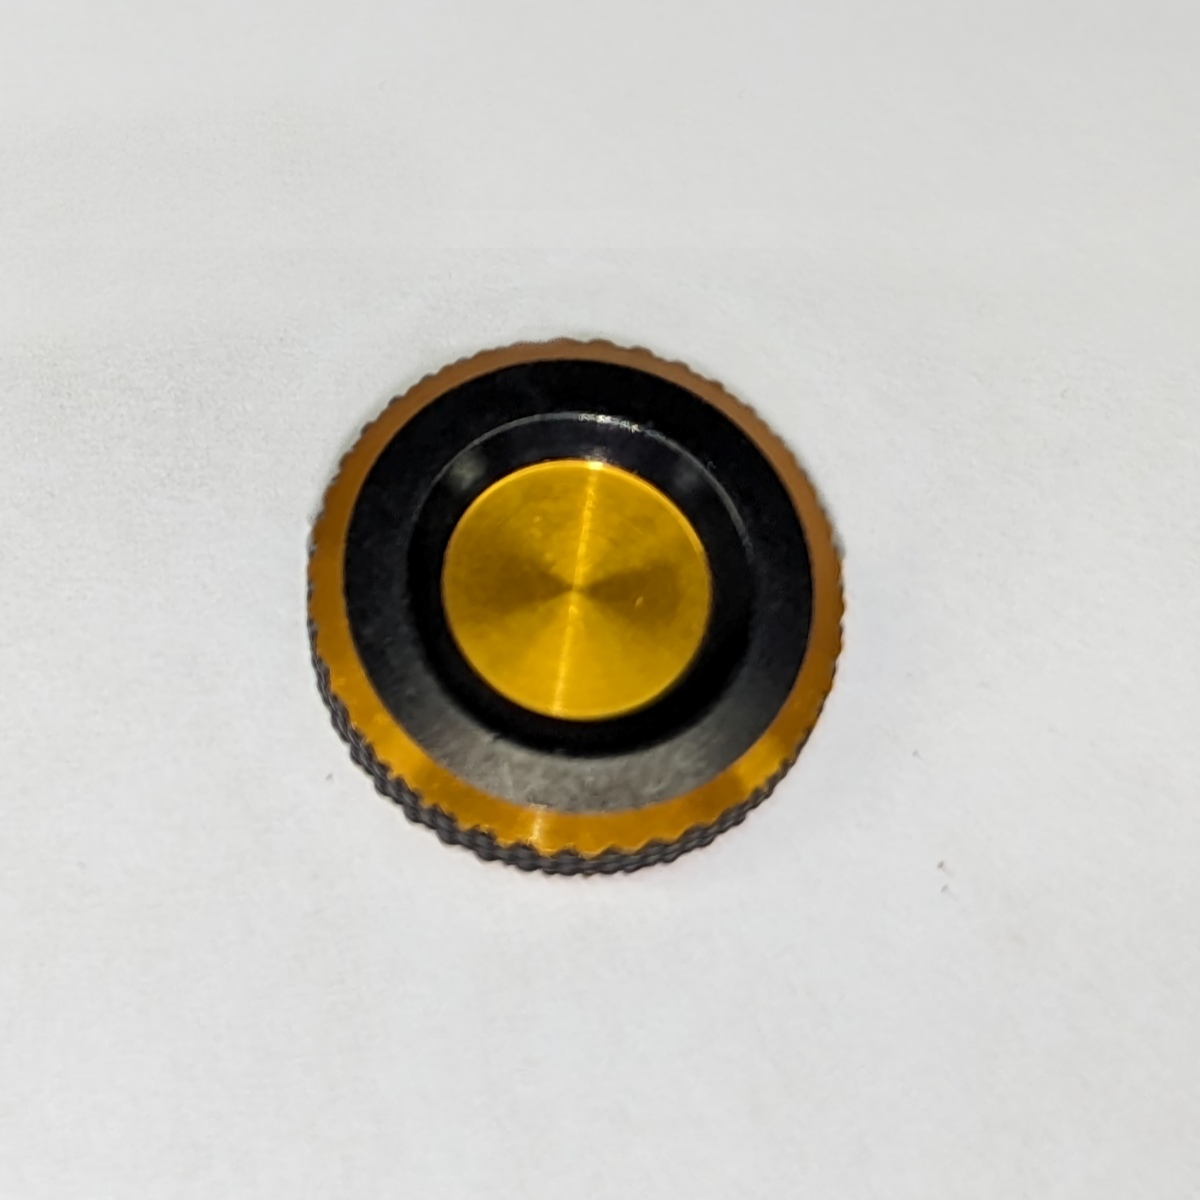 233A-SLAiV3500 Cap, Handle Cap (Closed Bearing Cover) (Black w/ Gold Accent)